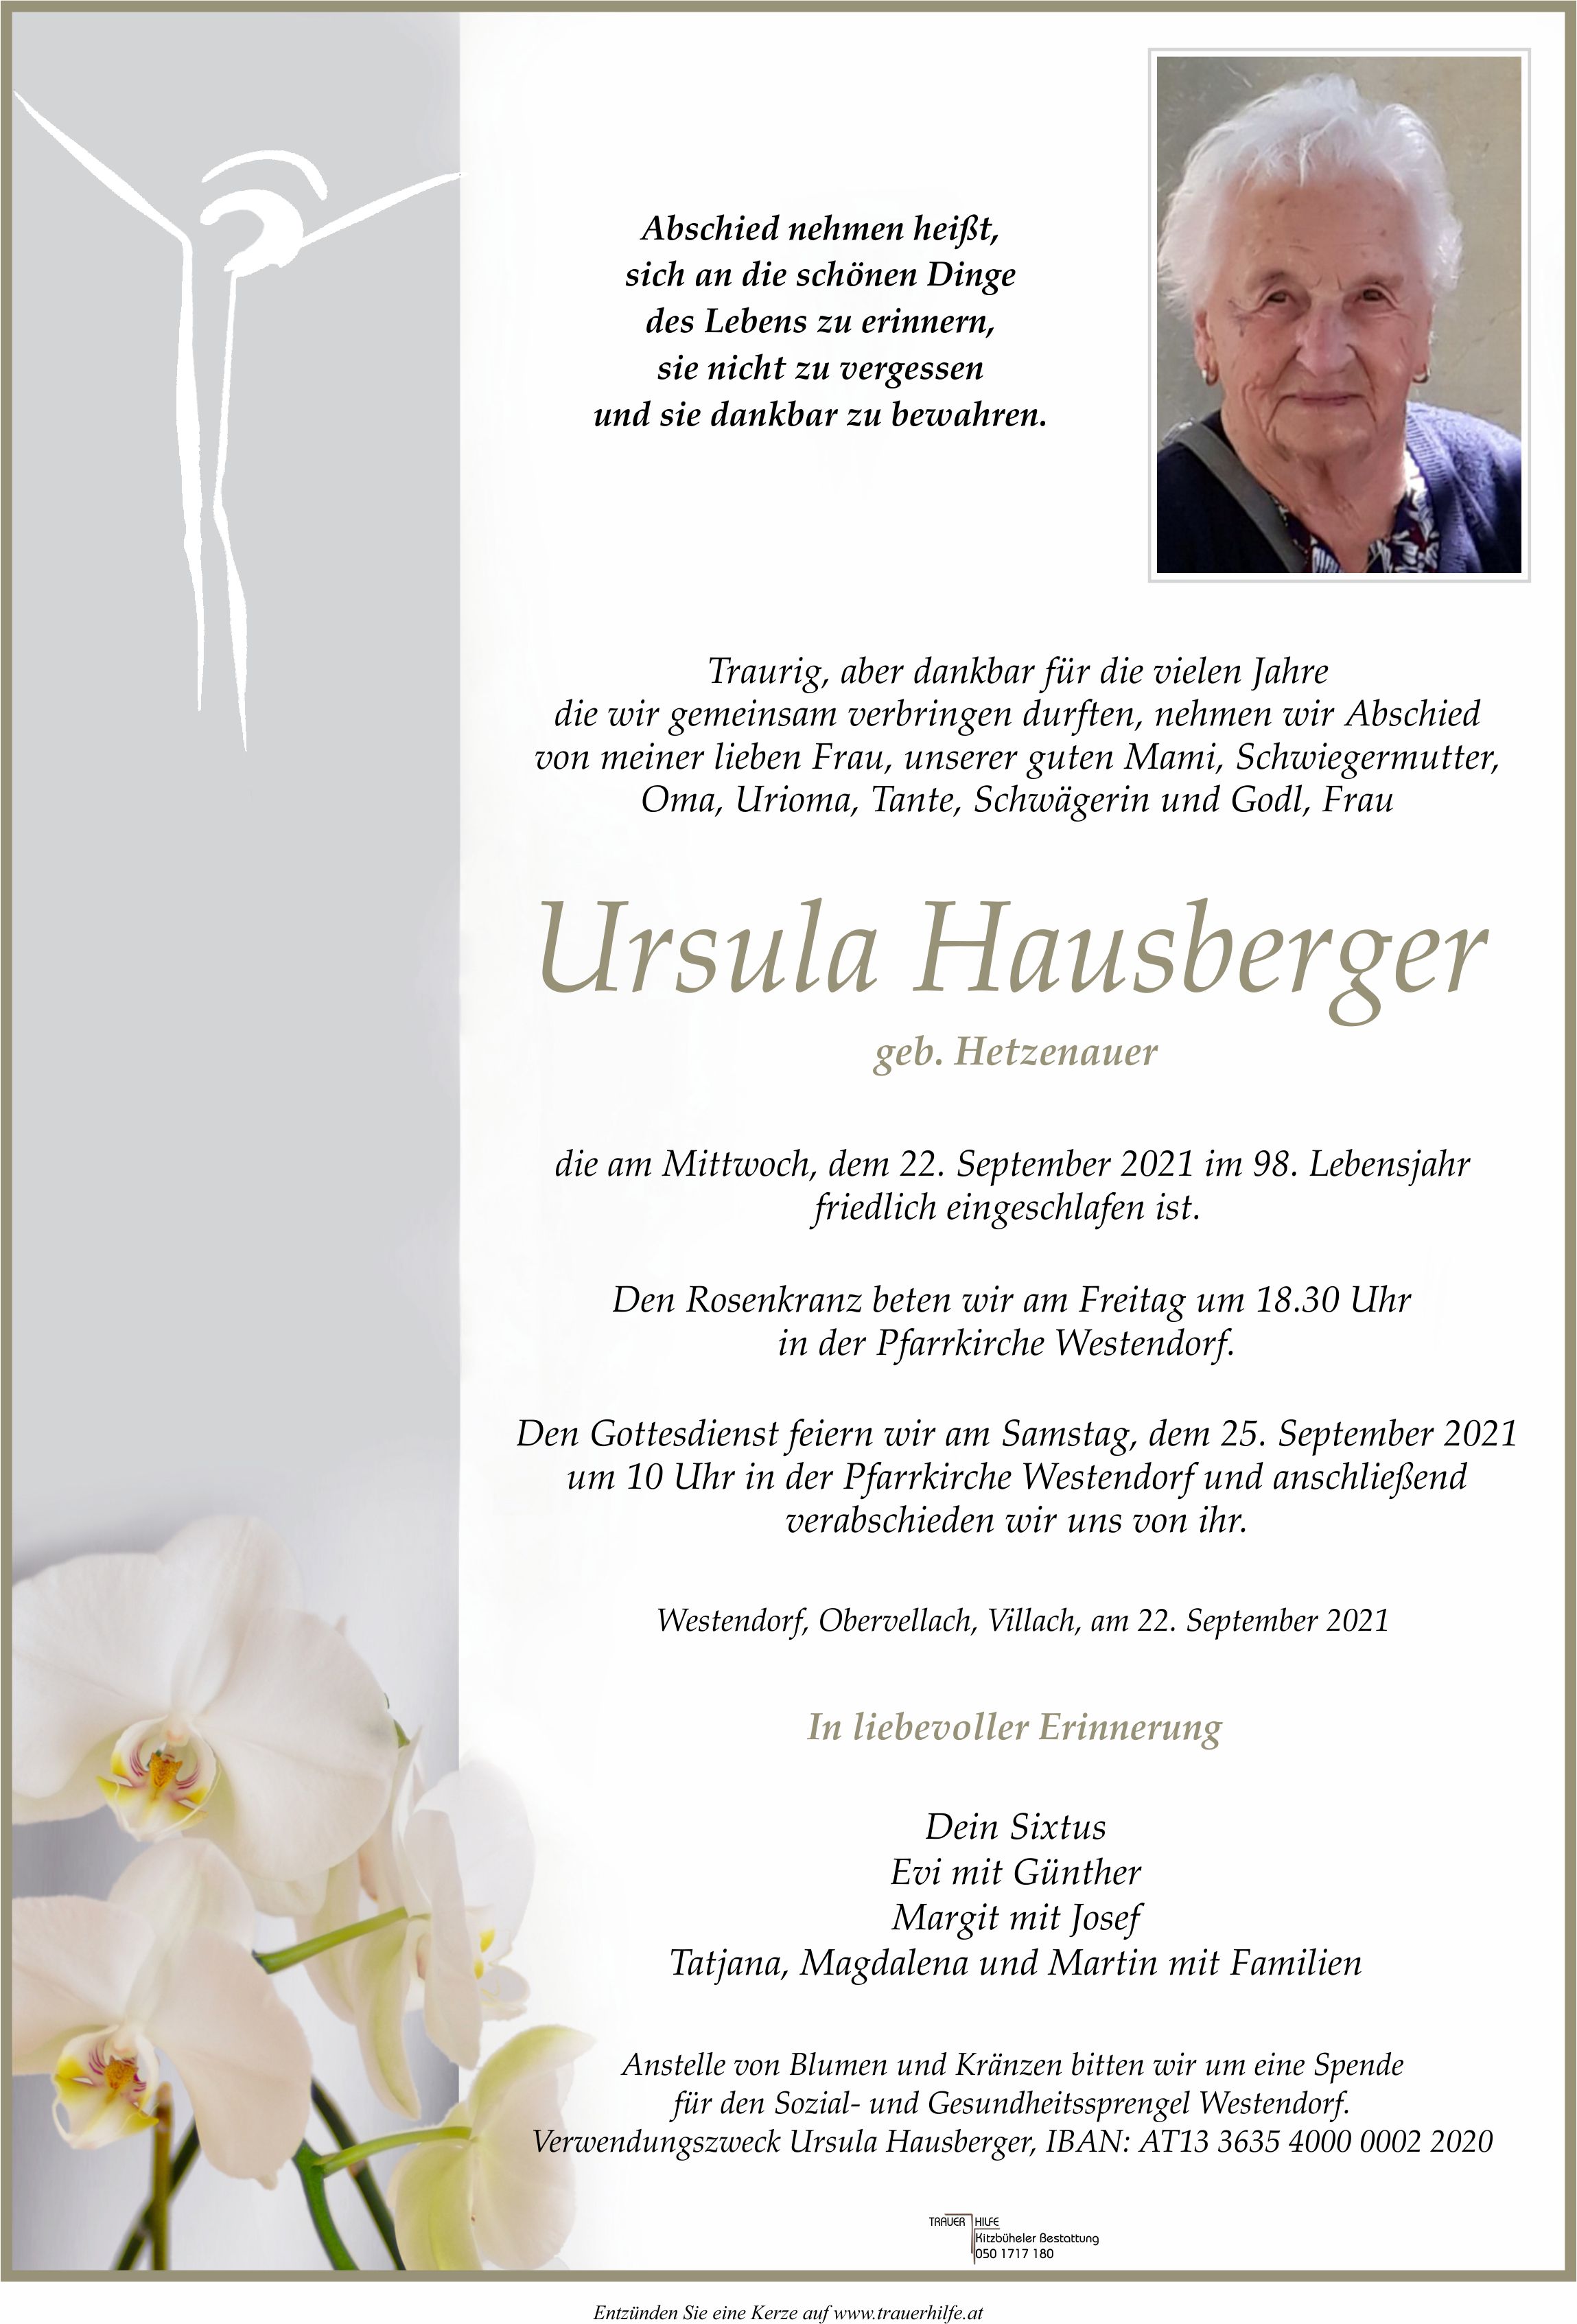 Ursula Hausberger